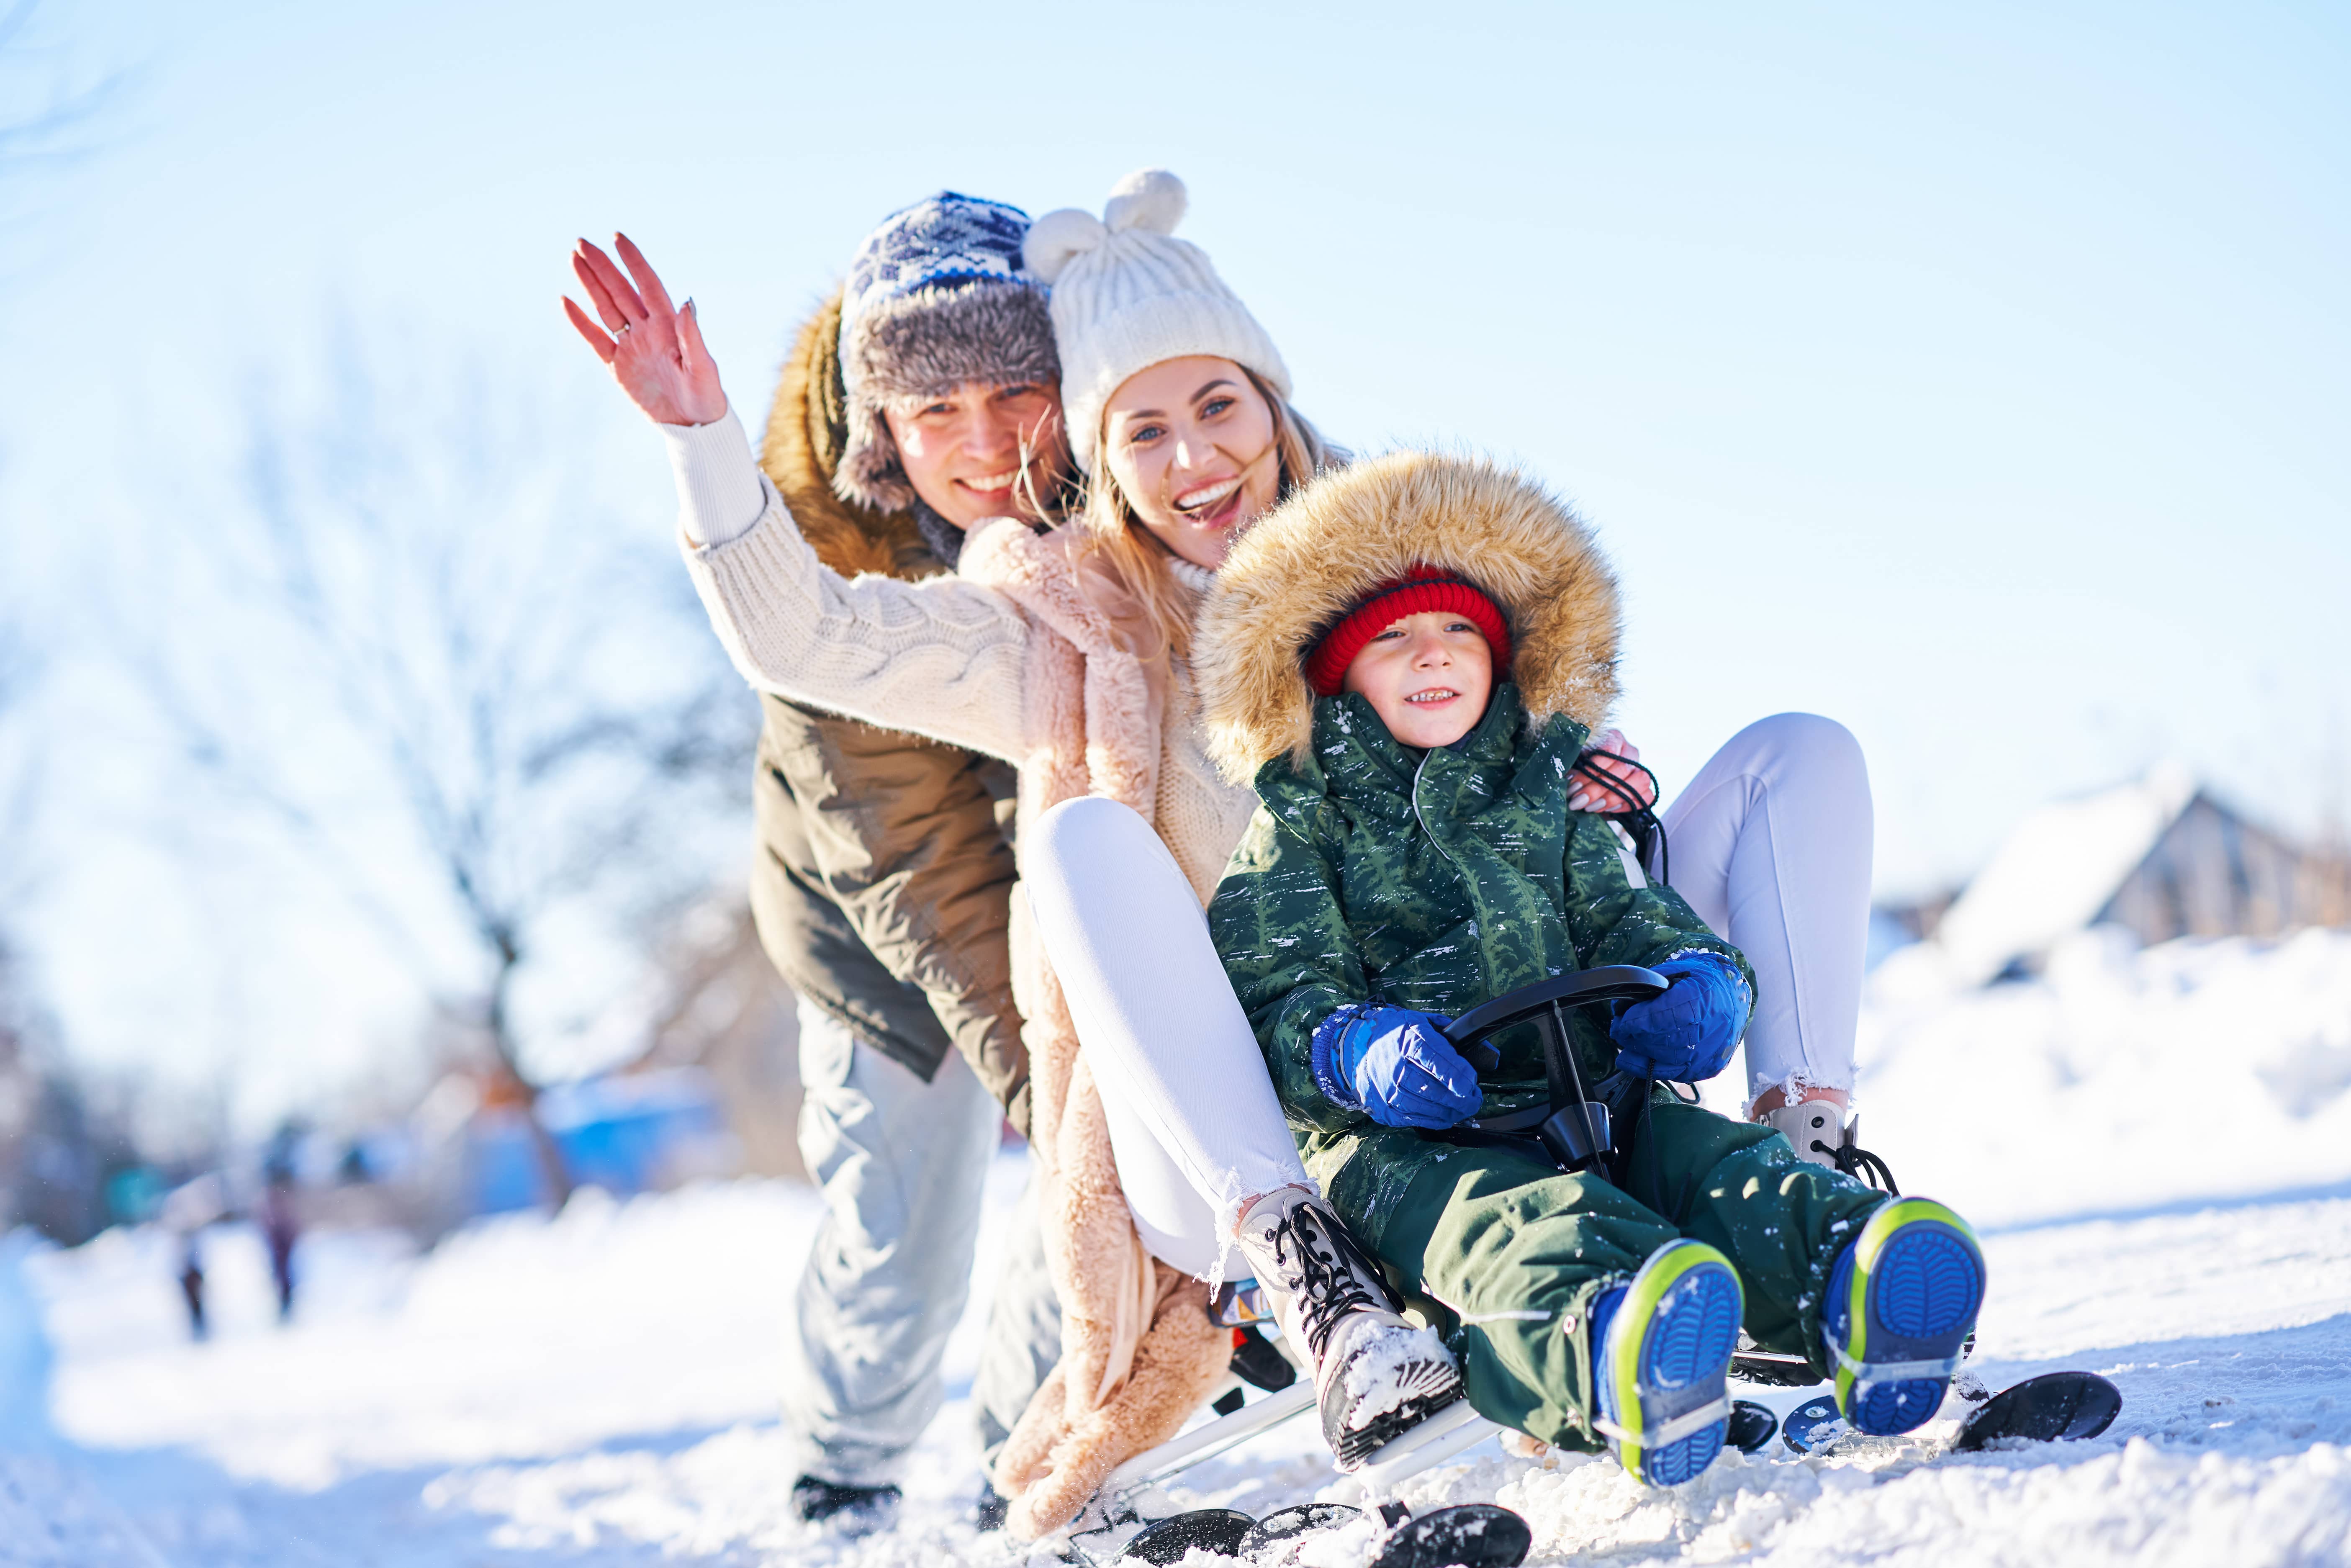 tgv lyria happy family having fun on winter snow